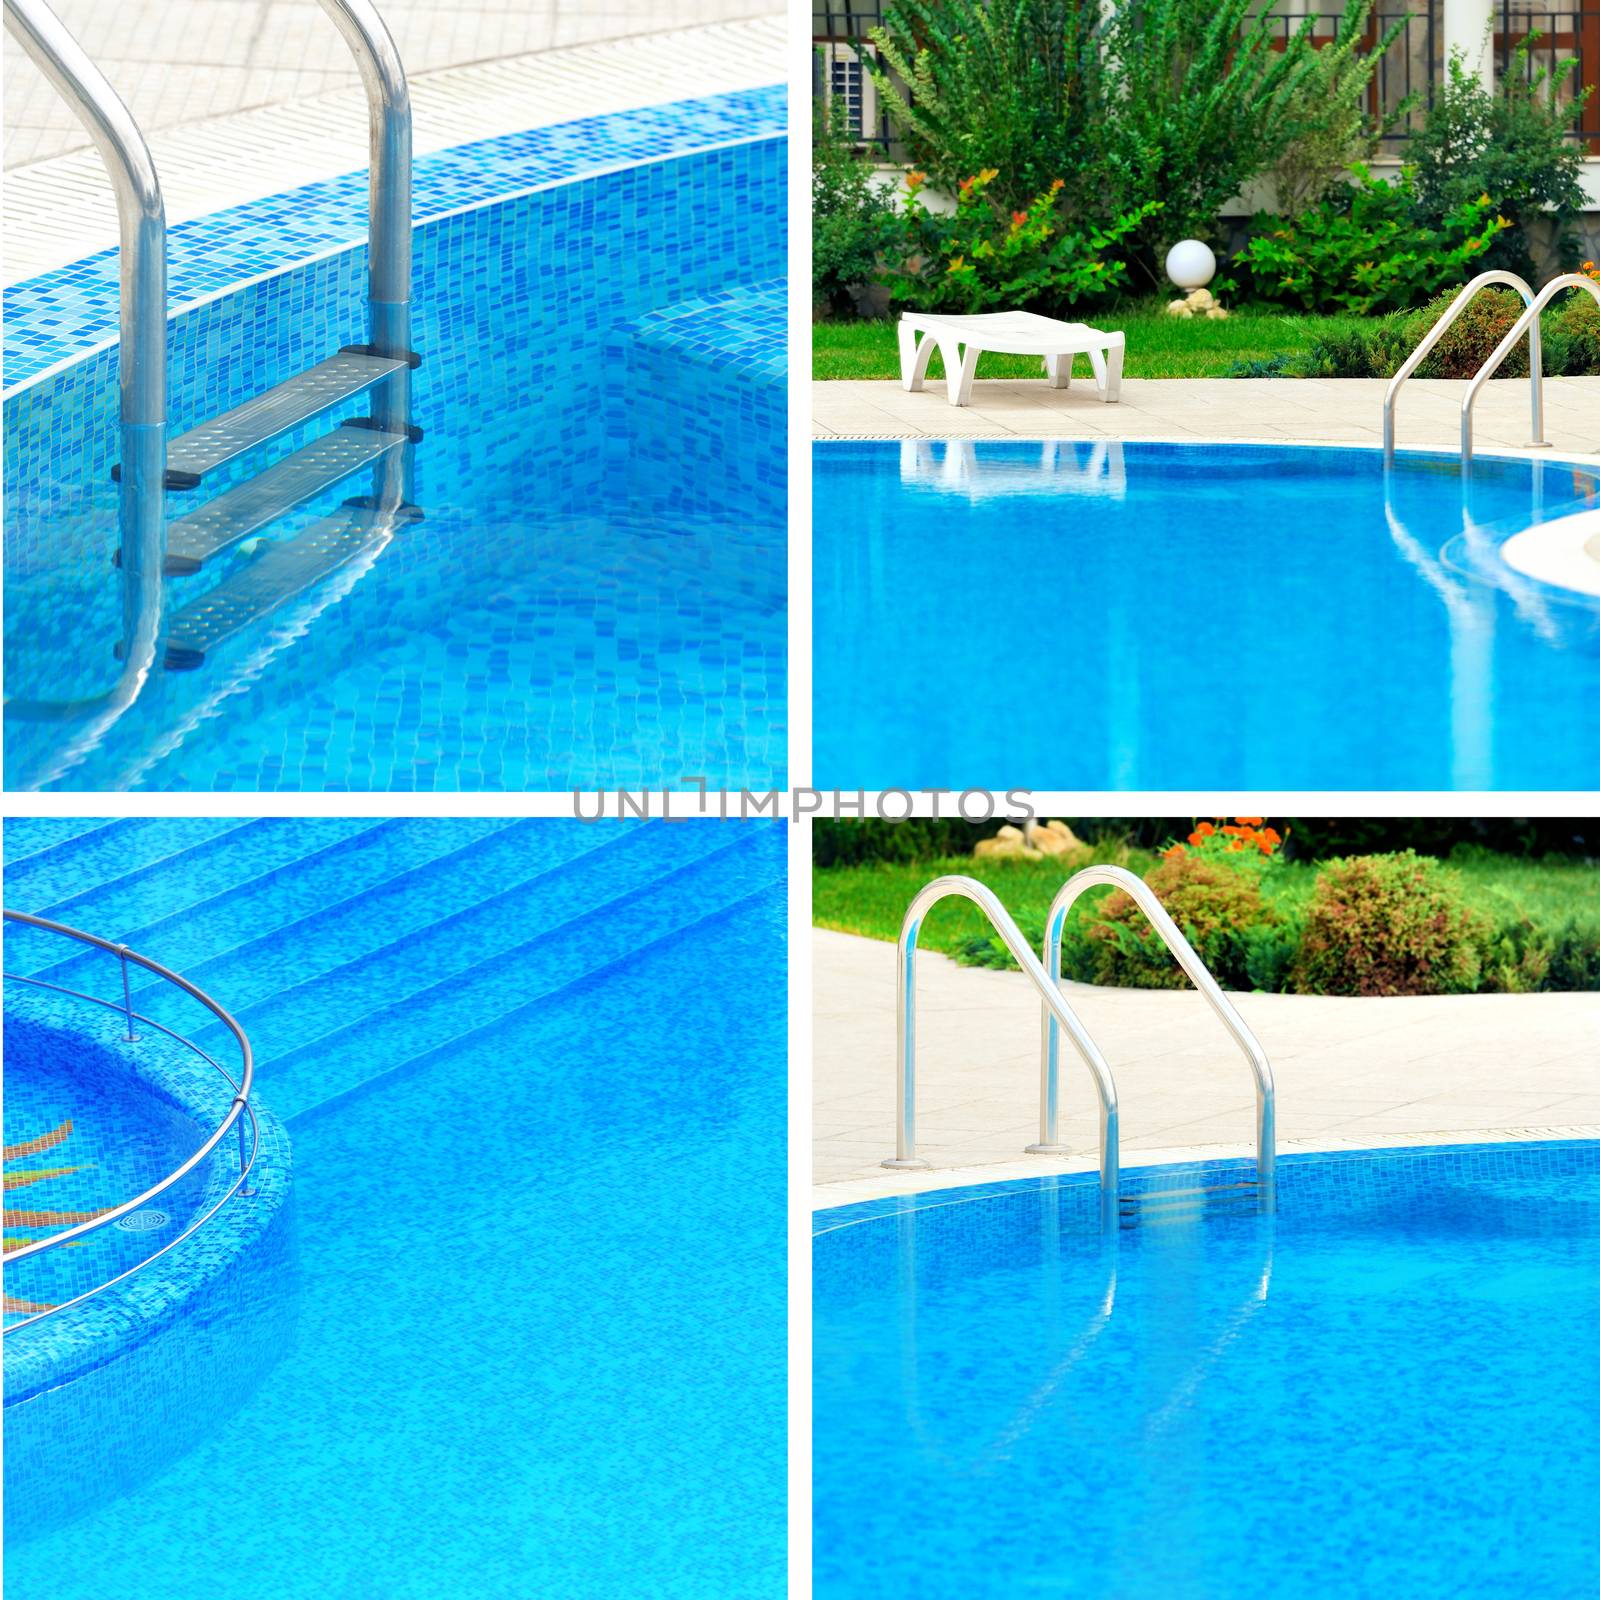 Swimming pool collage by byrdyak